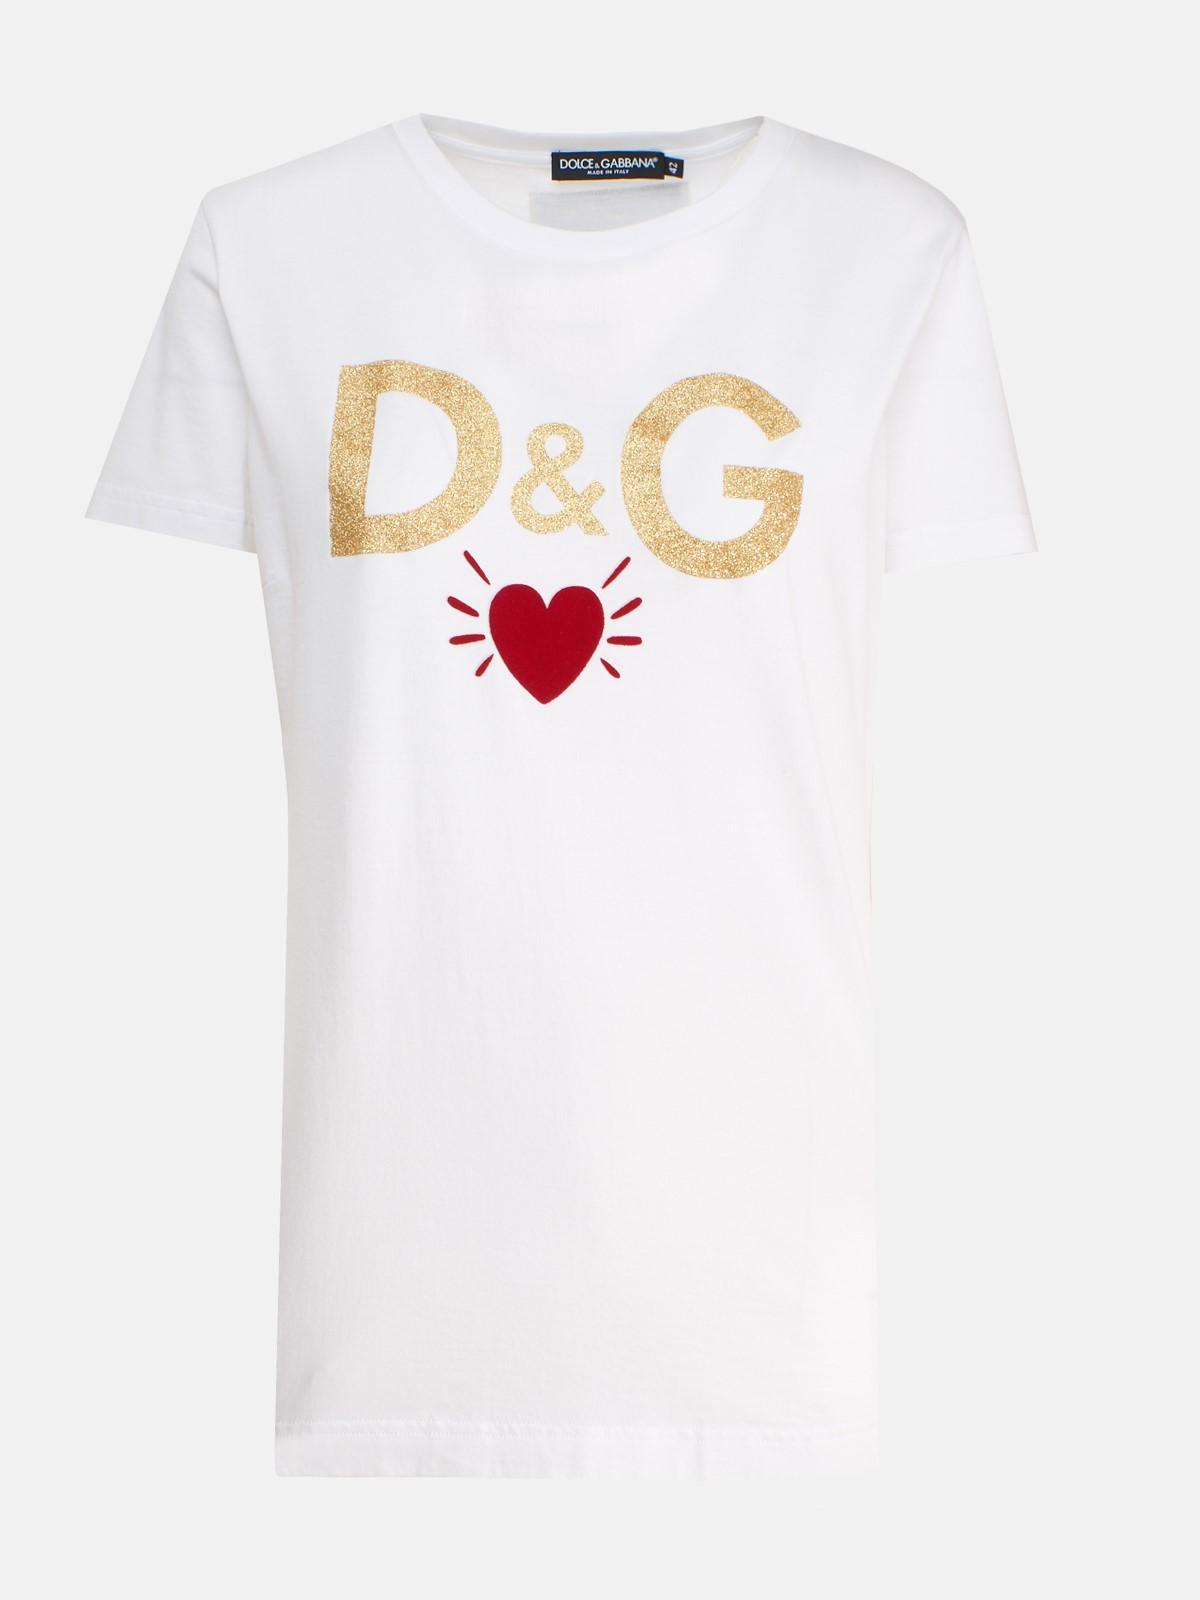 Dolce & Gabbana Cotton Heart Logo T Shirt in Black White (White) - Lyst